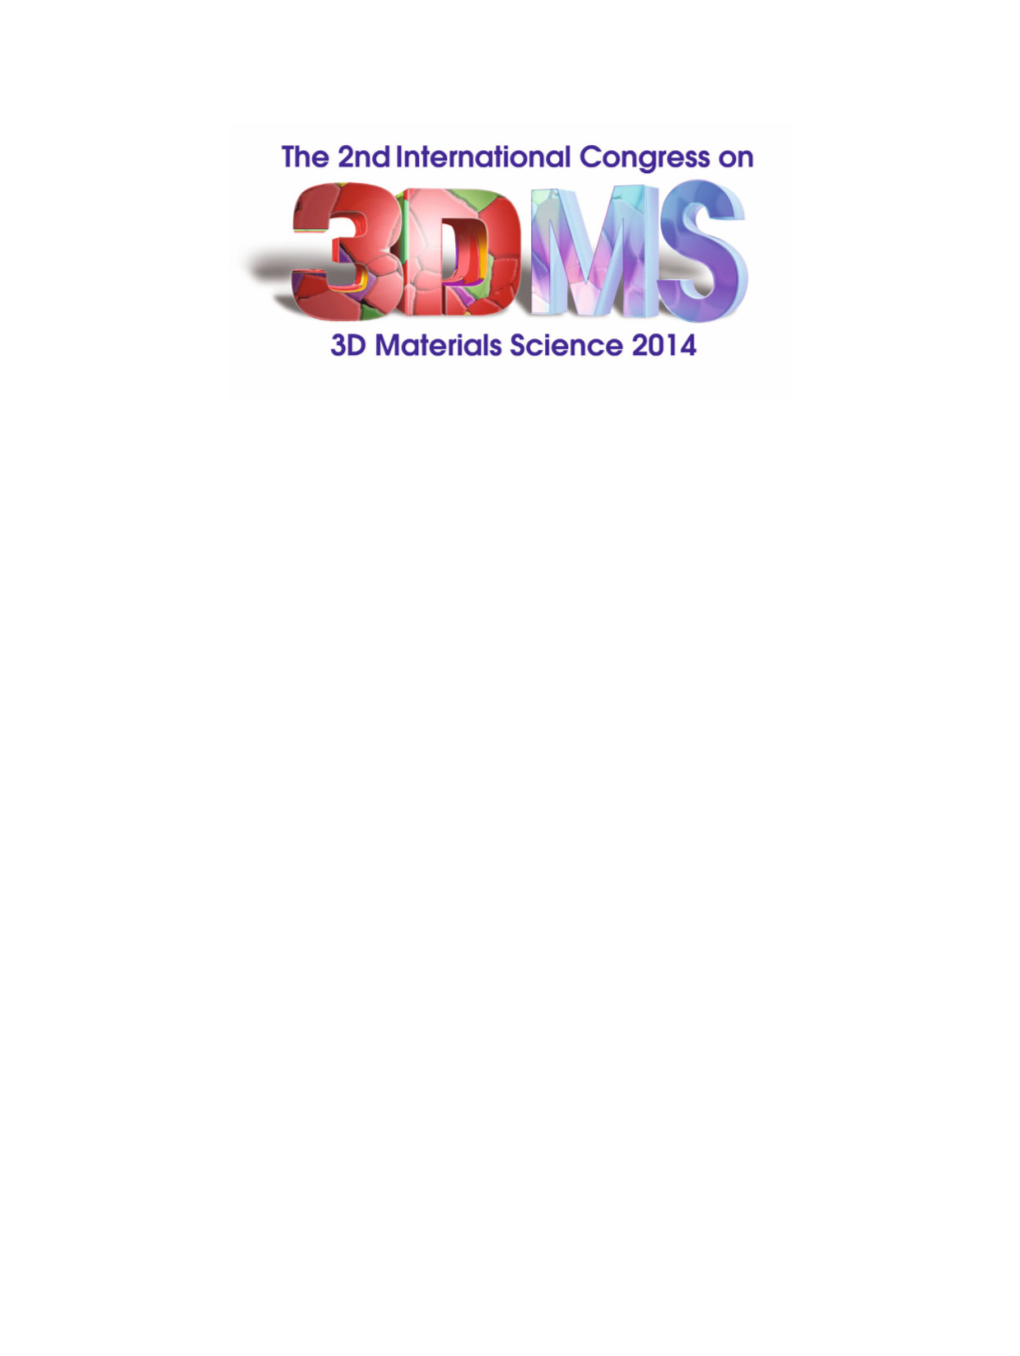 The 2Nd International Congress on 3D Materials Science 2014